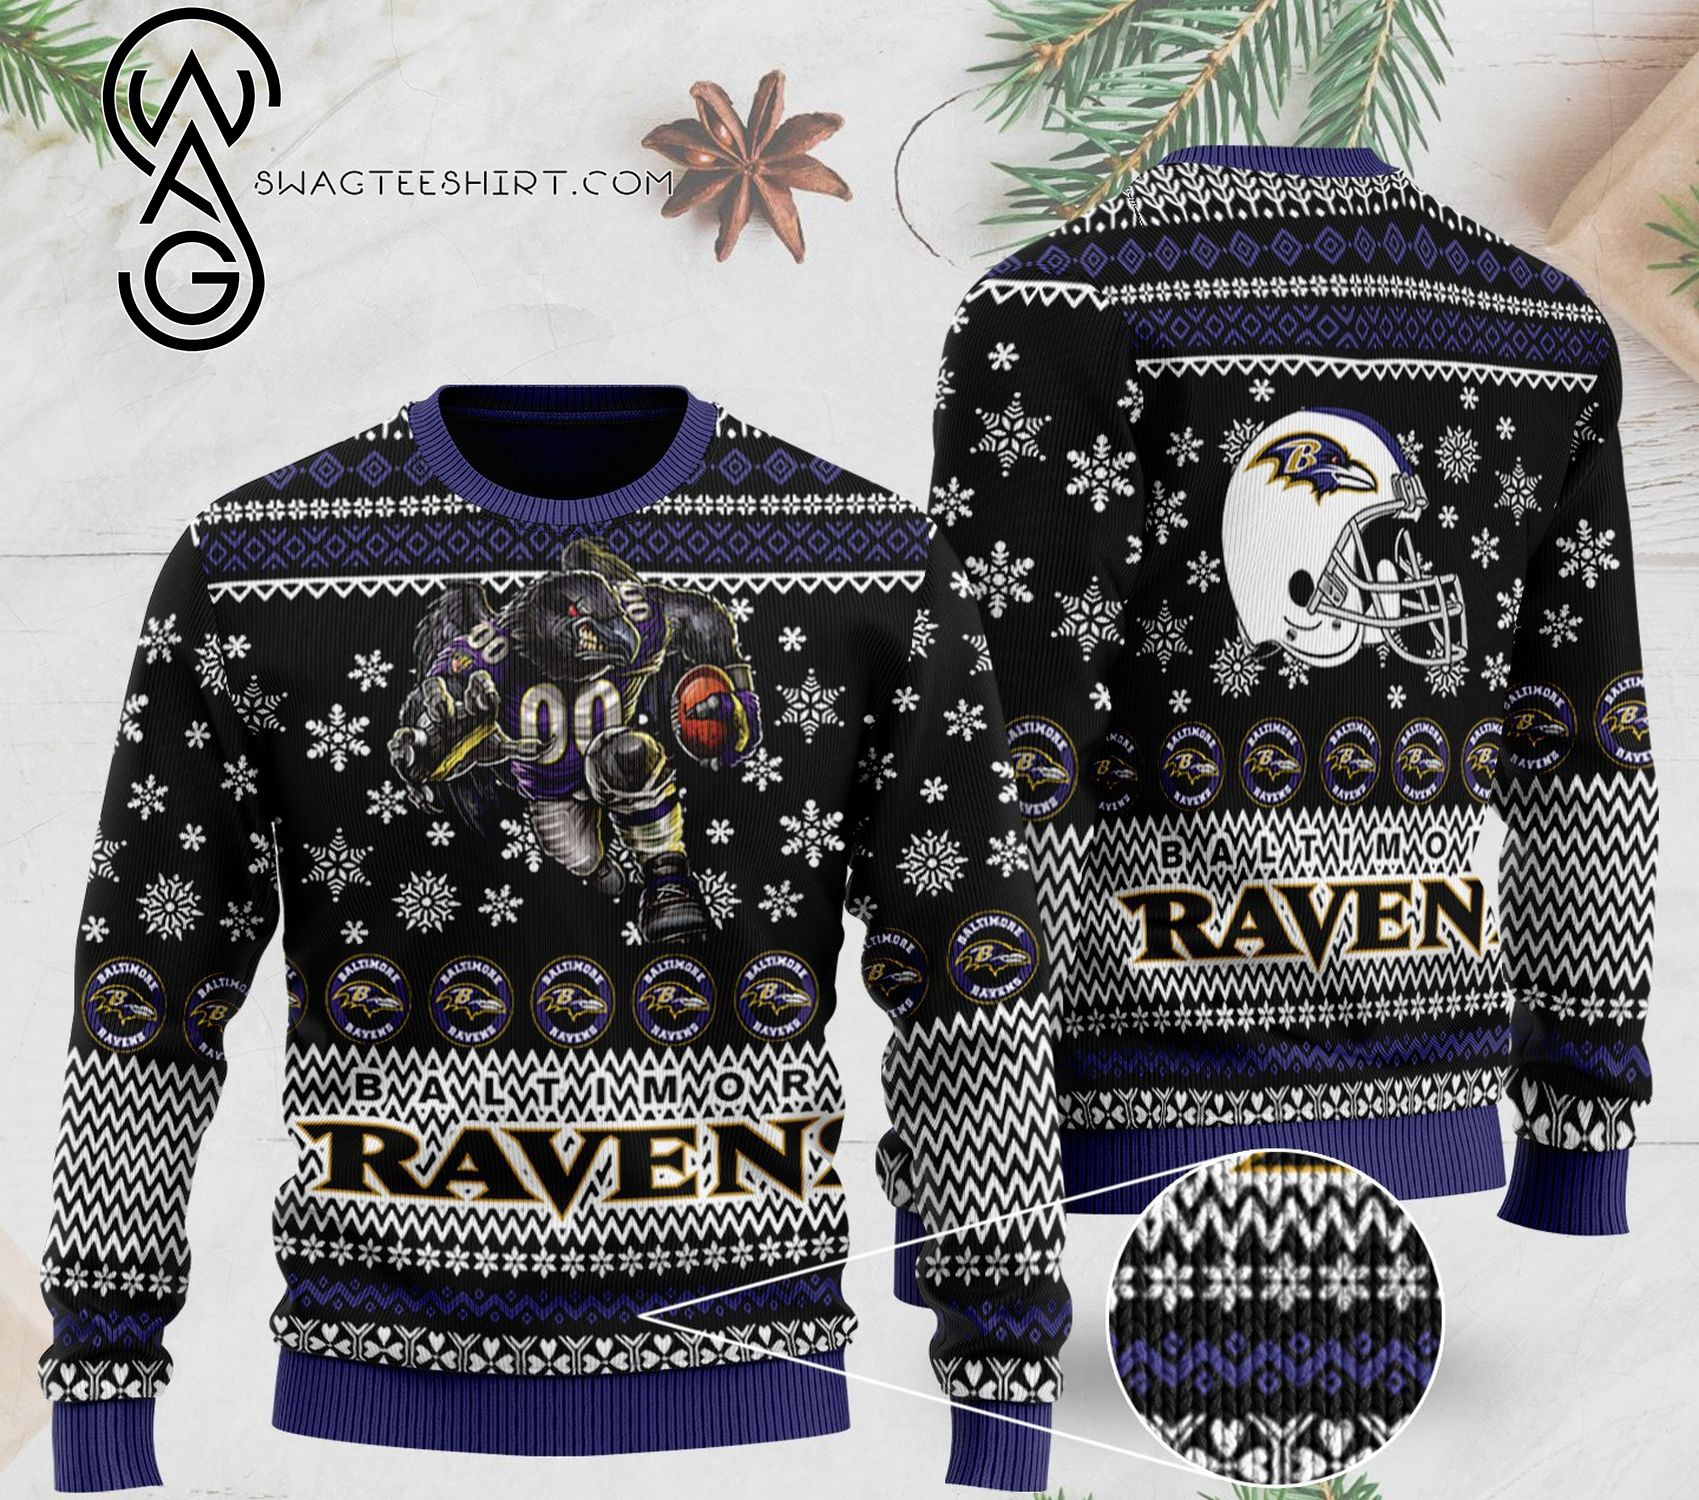 National Football League Baltimore Ravens Full Print Ugly Christmas Sweater